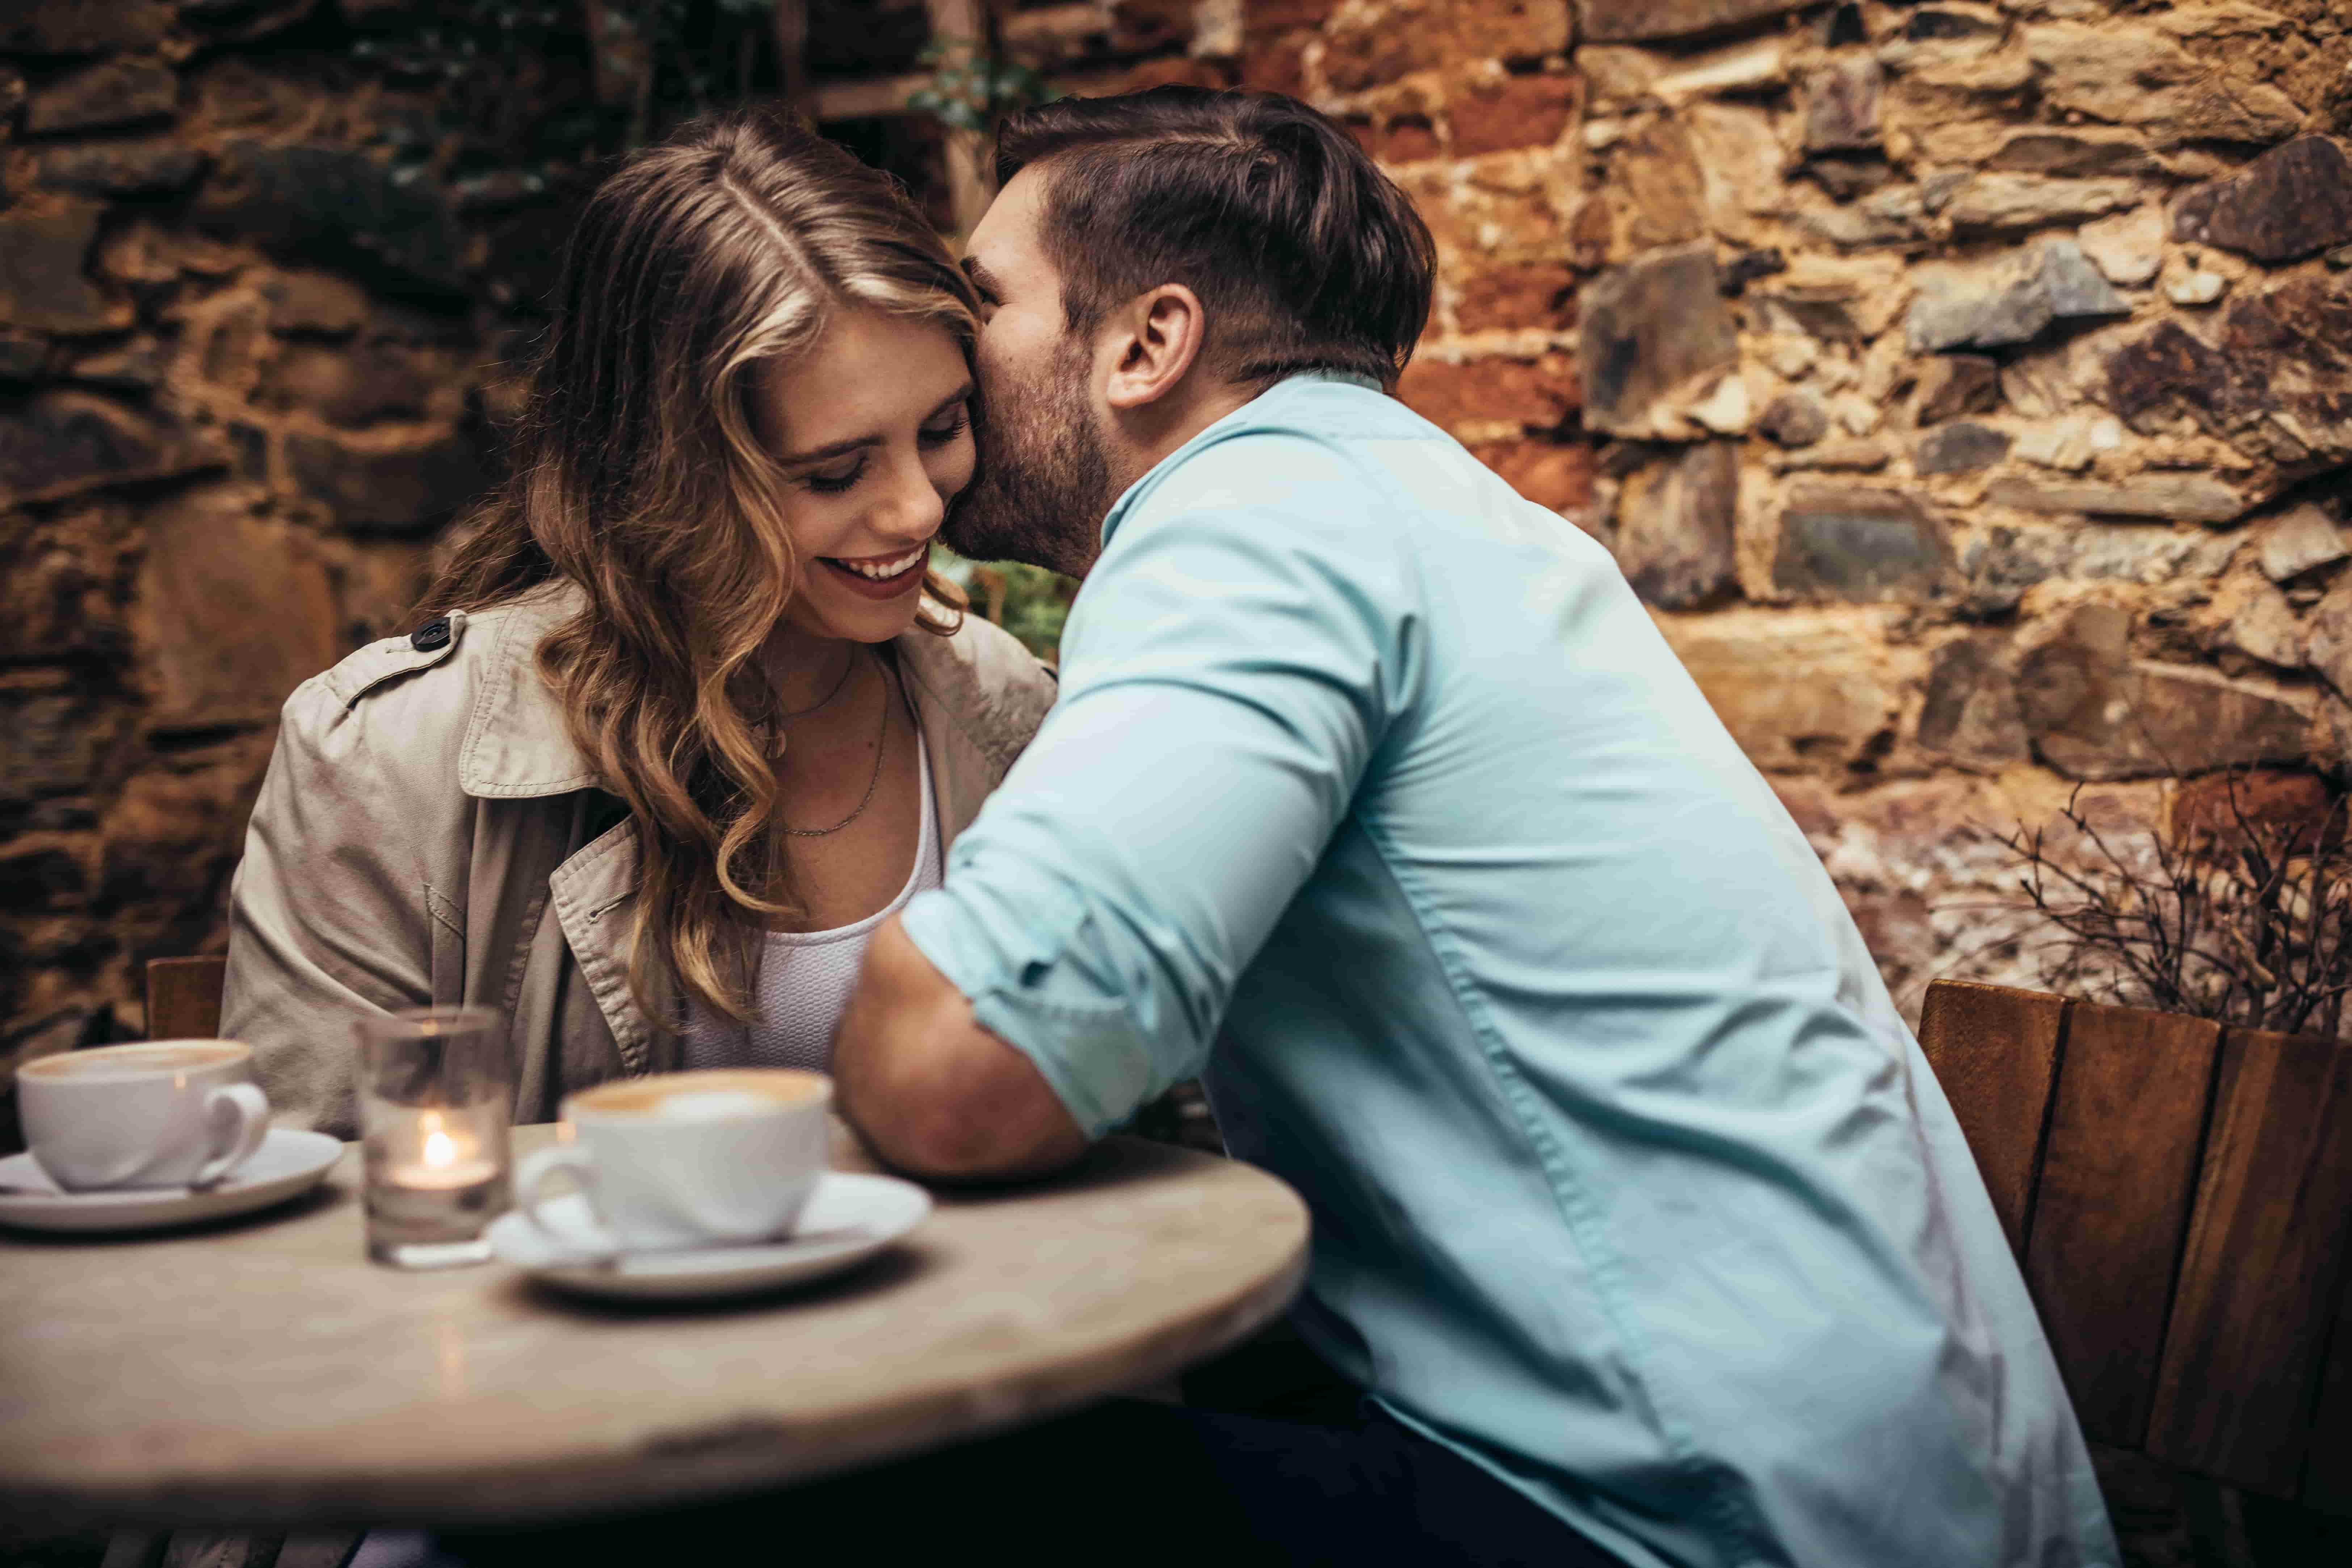 Man Whispering In Womans Ear On A Date